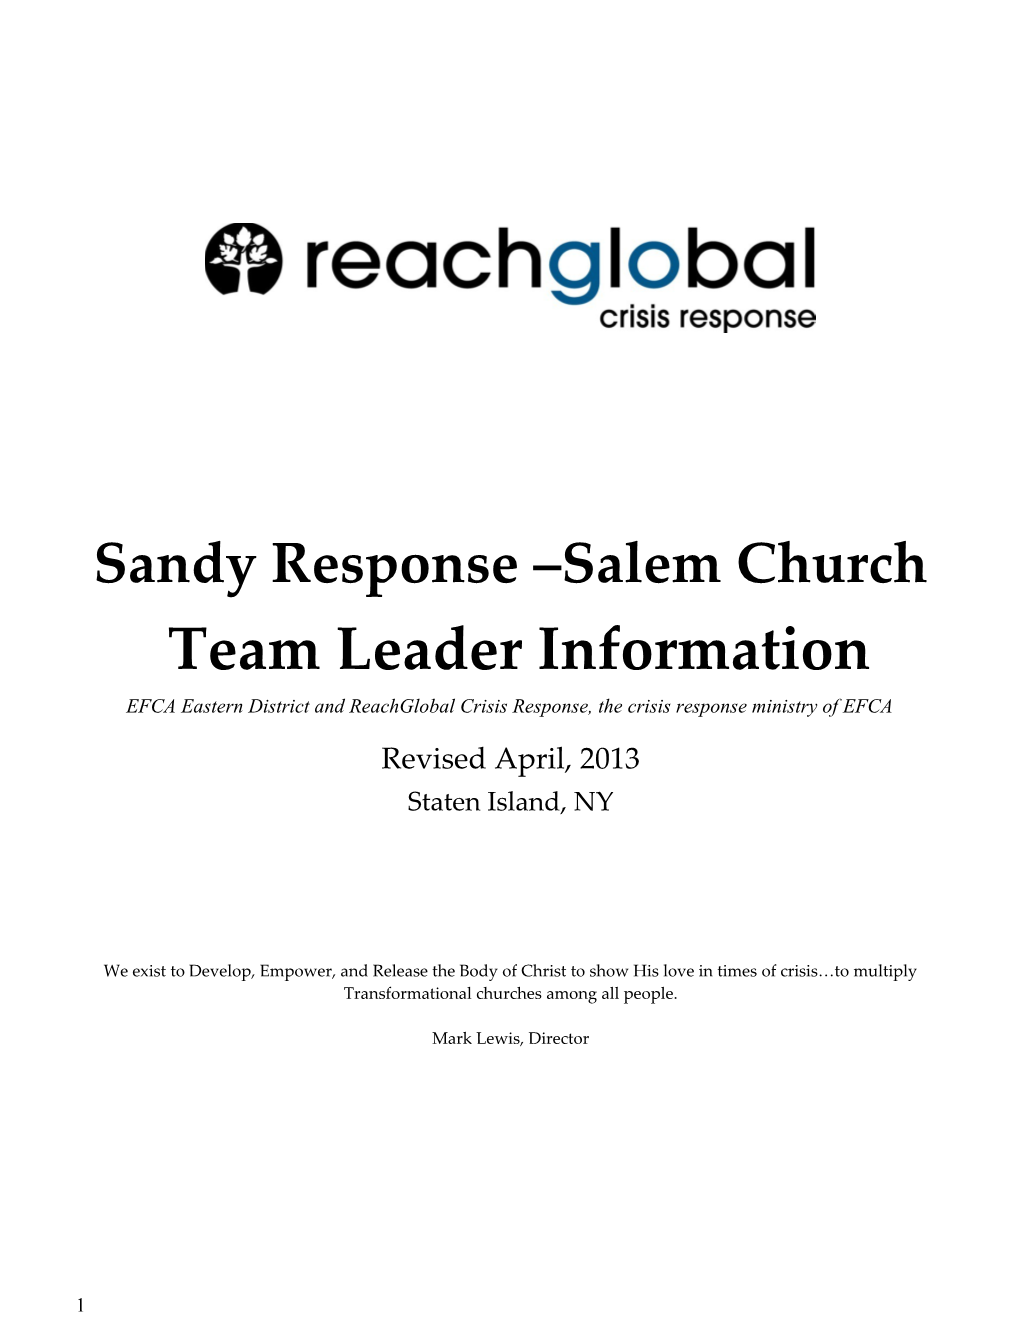 Sandy Response Salem Church Team Leader Information